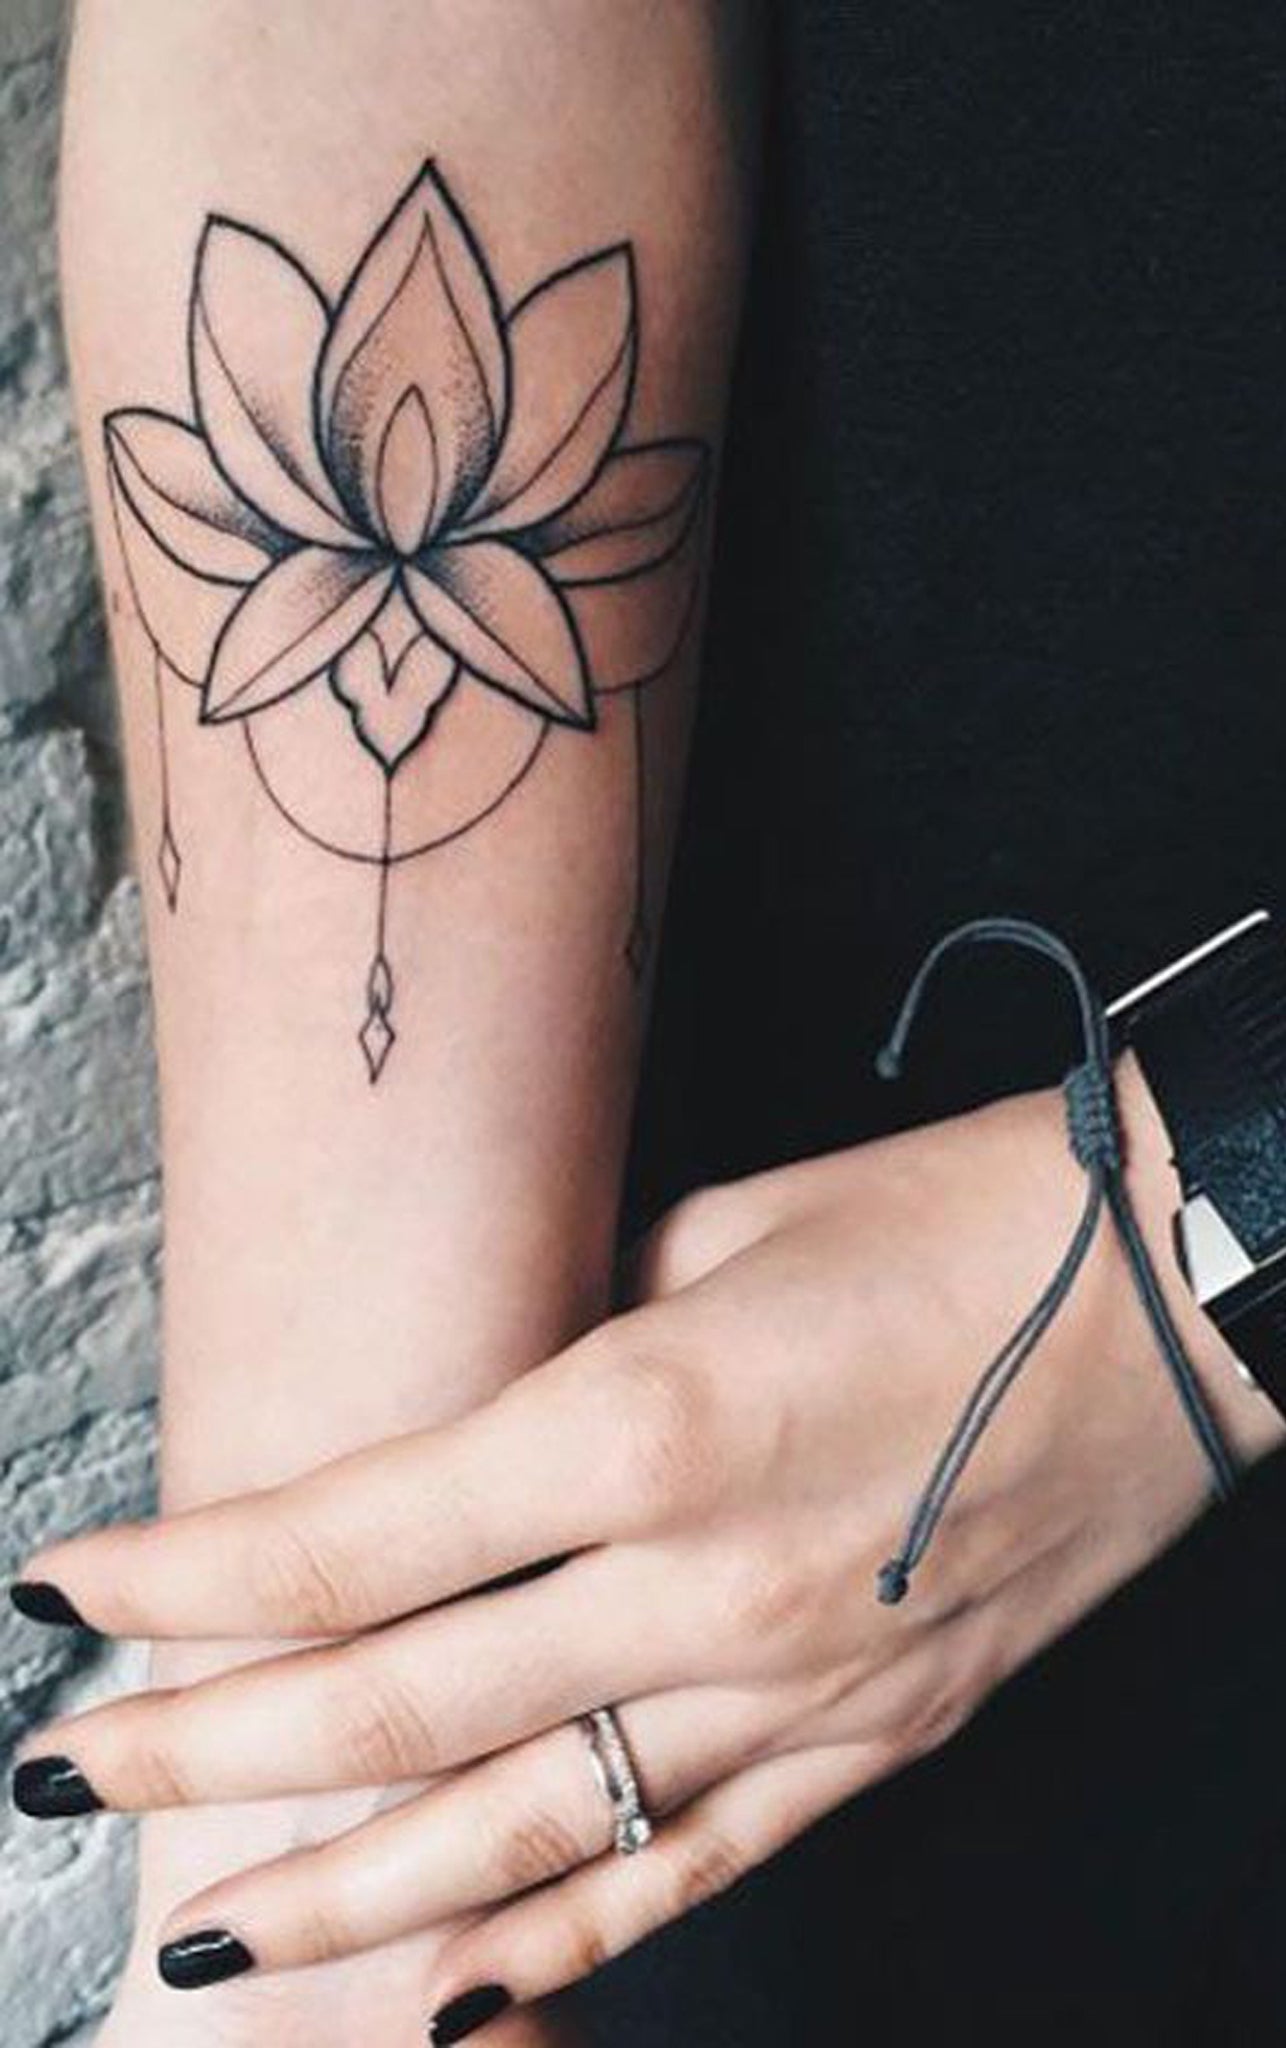 Black and White Lotus Chandelier Forearm Tattoo Ideas for Women - Tribal Bohemian Boho Chic Lily Flower Arm Tat -  ideas del tatuaje del antebrazo de loto para las mujeres - www.MyBodiArt.com